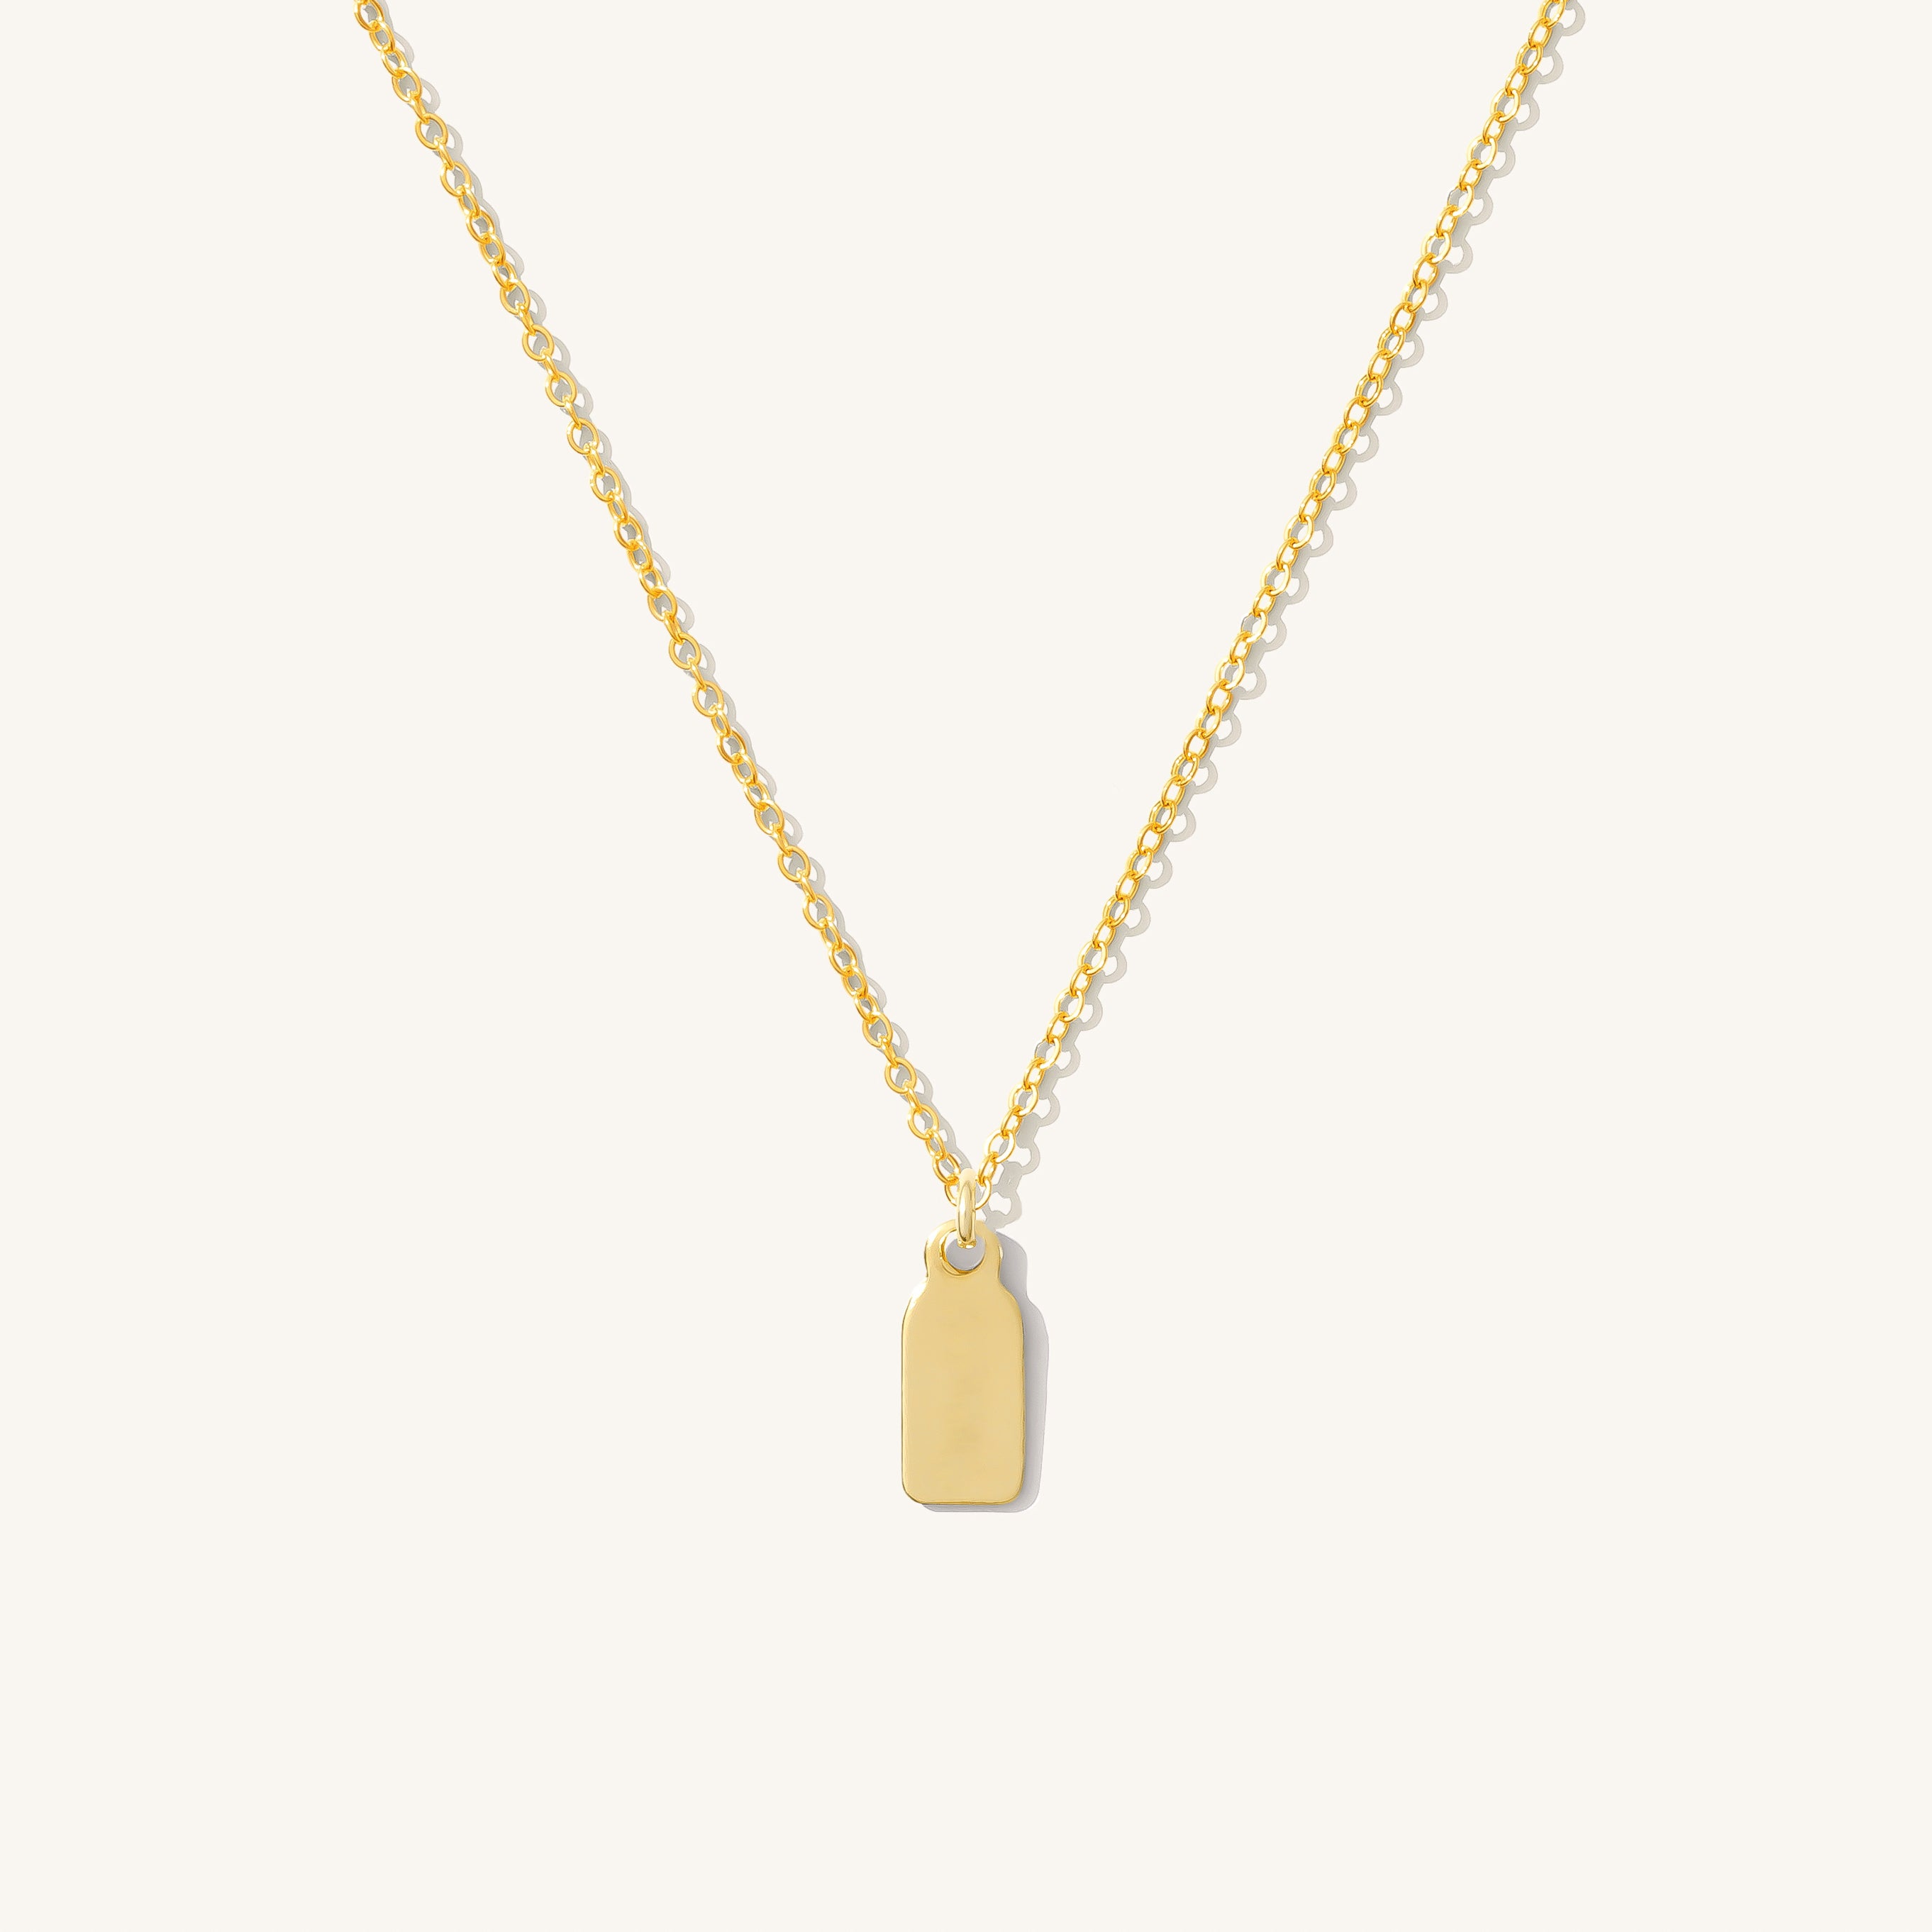 14k Gold Dog Tag Necklace